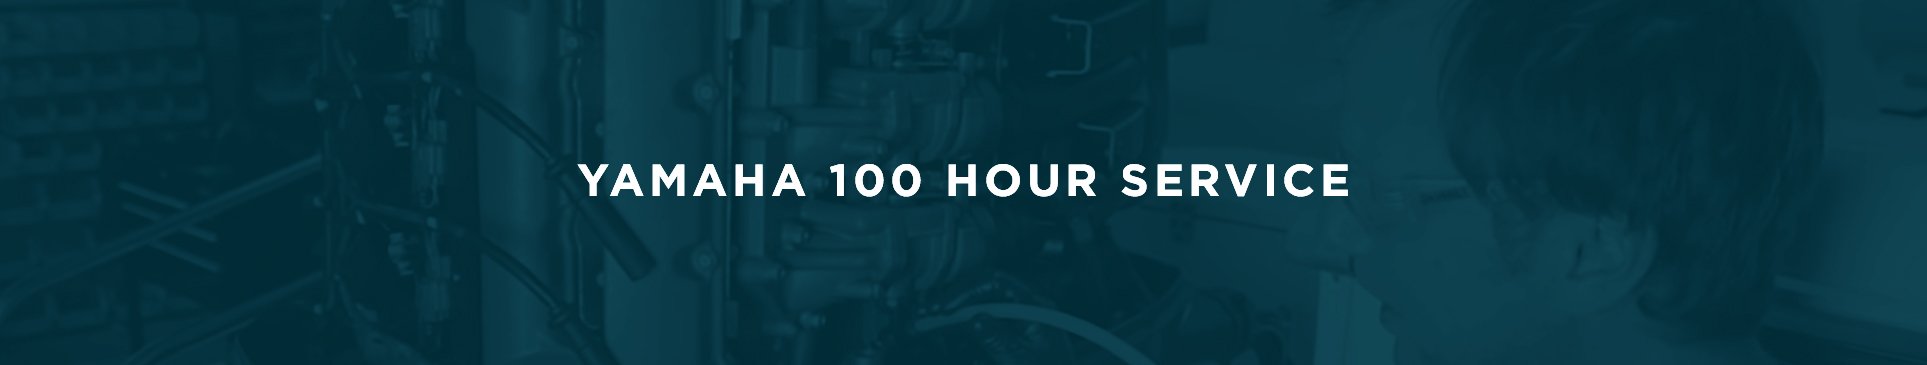 Yamaha 100 Hour Service